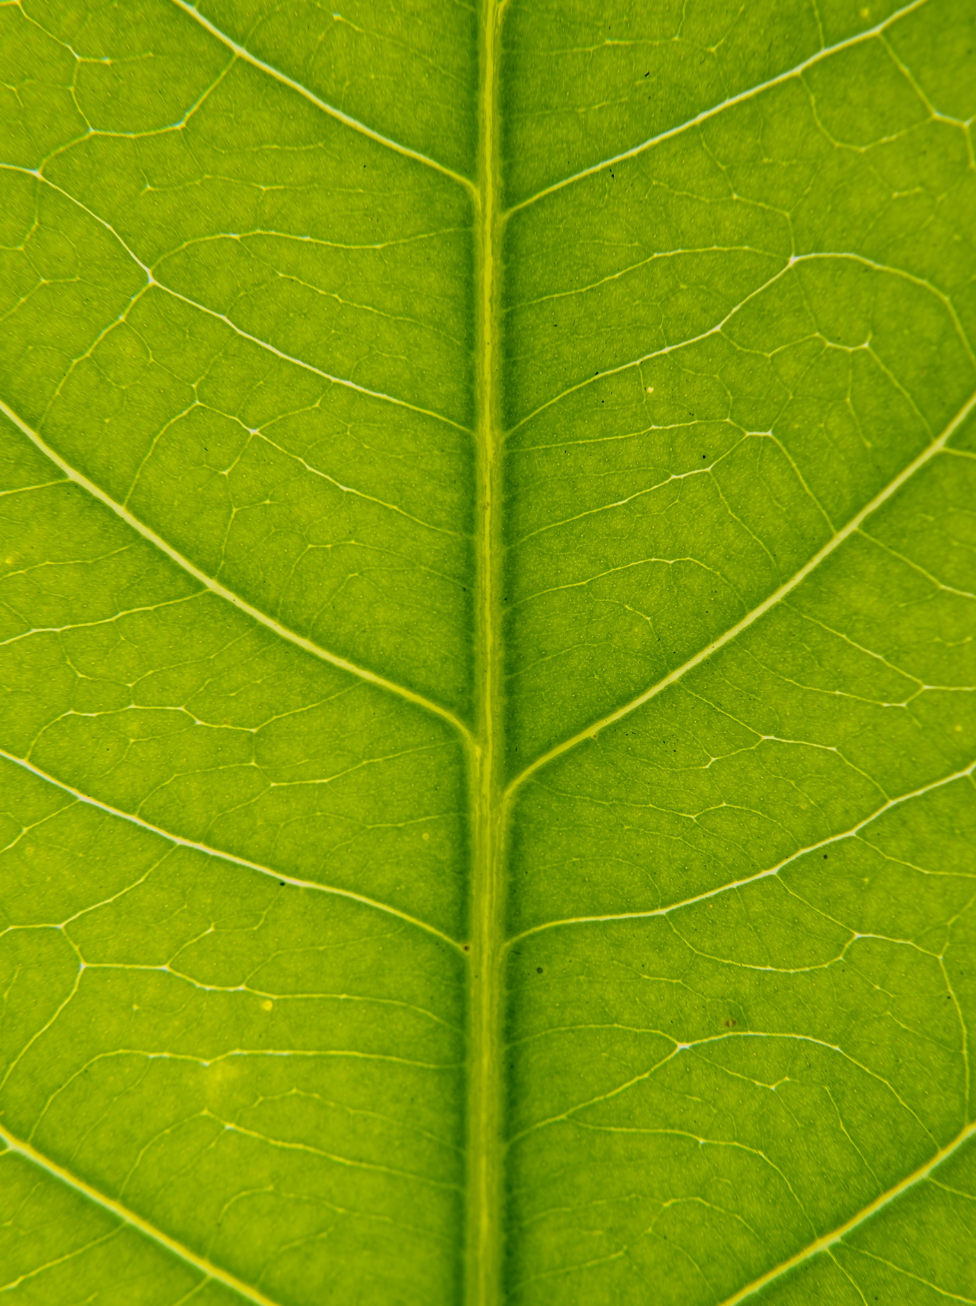 close up of a green tea leaf